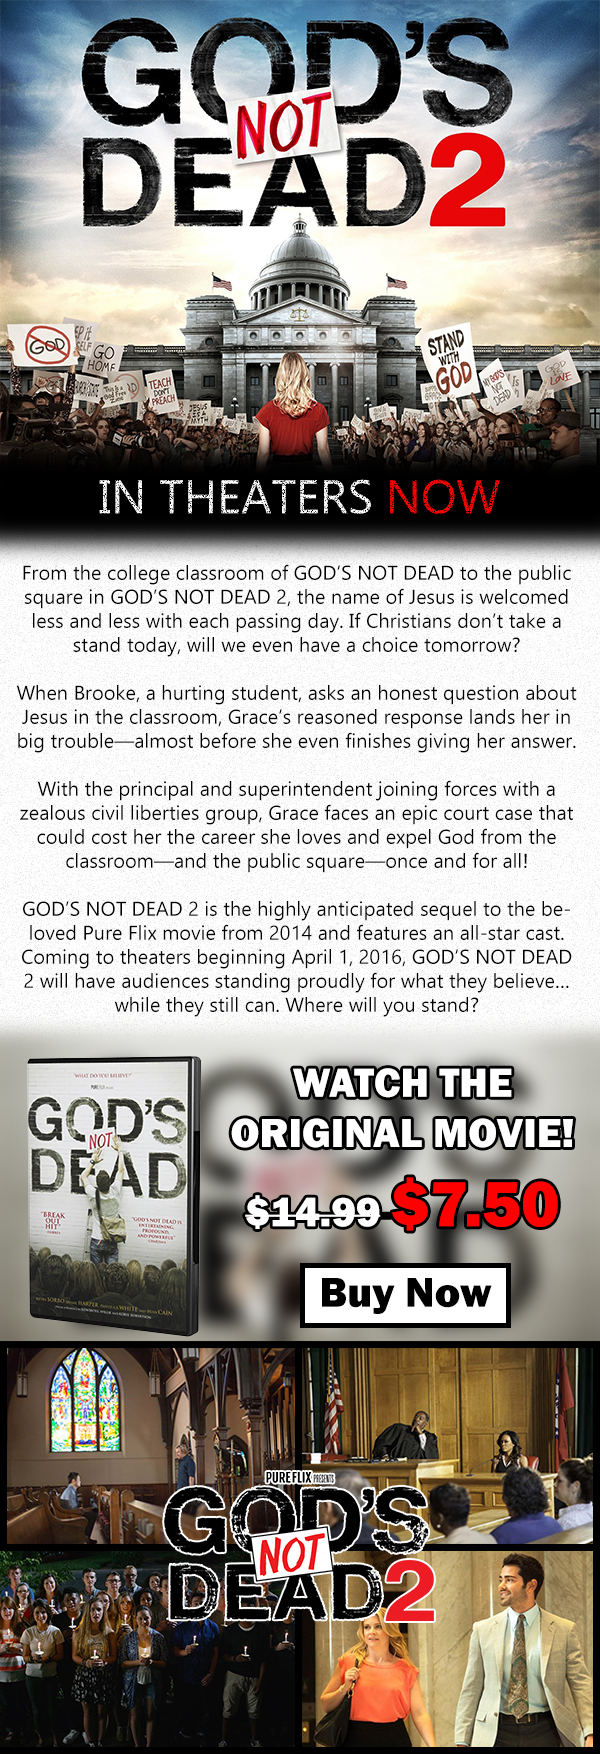 God's Not Dead 2 In Theaters Now! | God's Not Dead DVD on sale $7.50